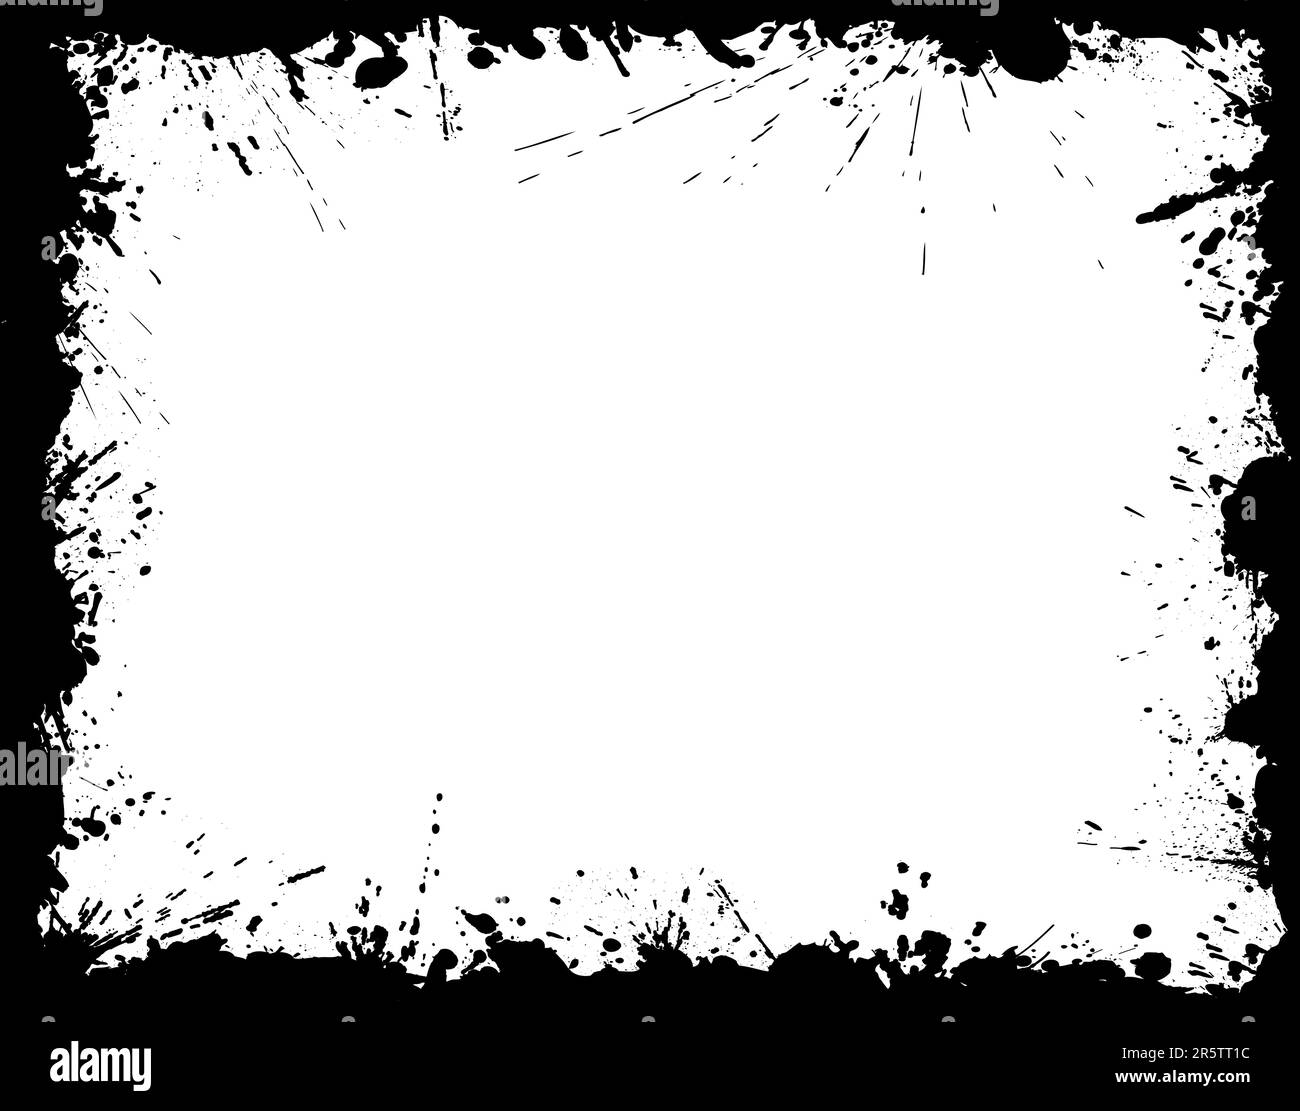 Ink splattered vector grunge border frame Stock Vector Image & Art - Alamy